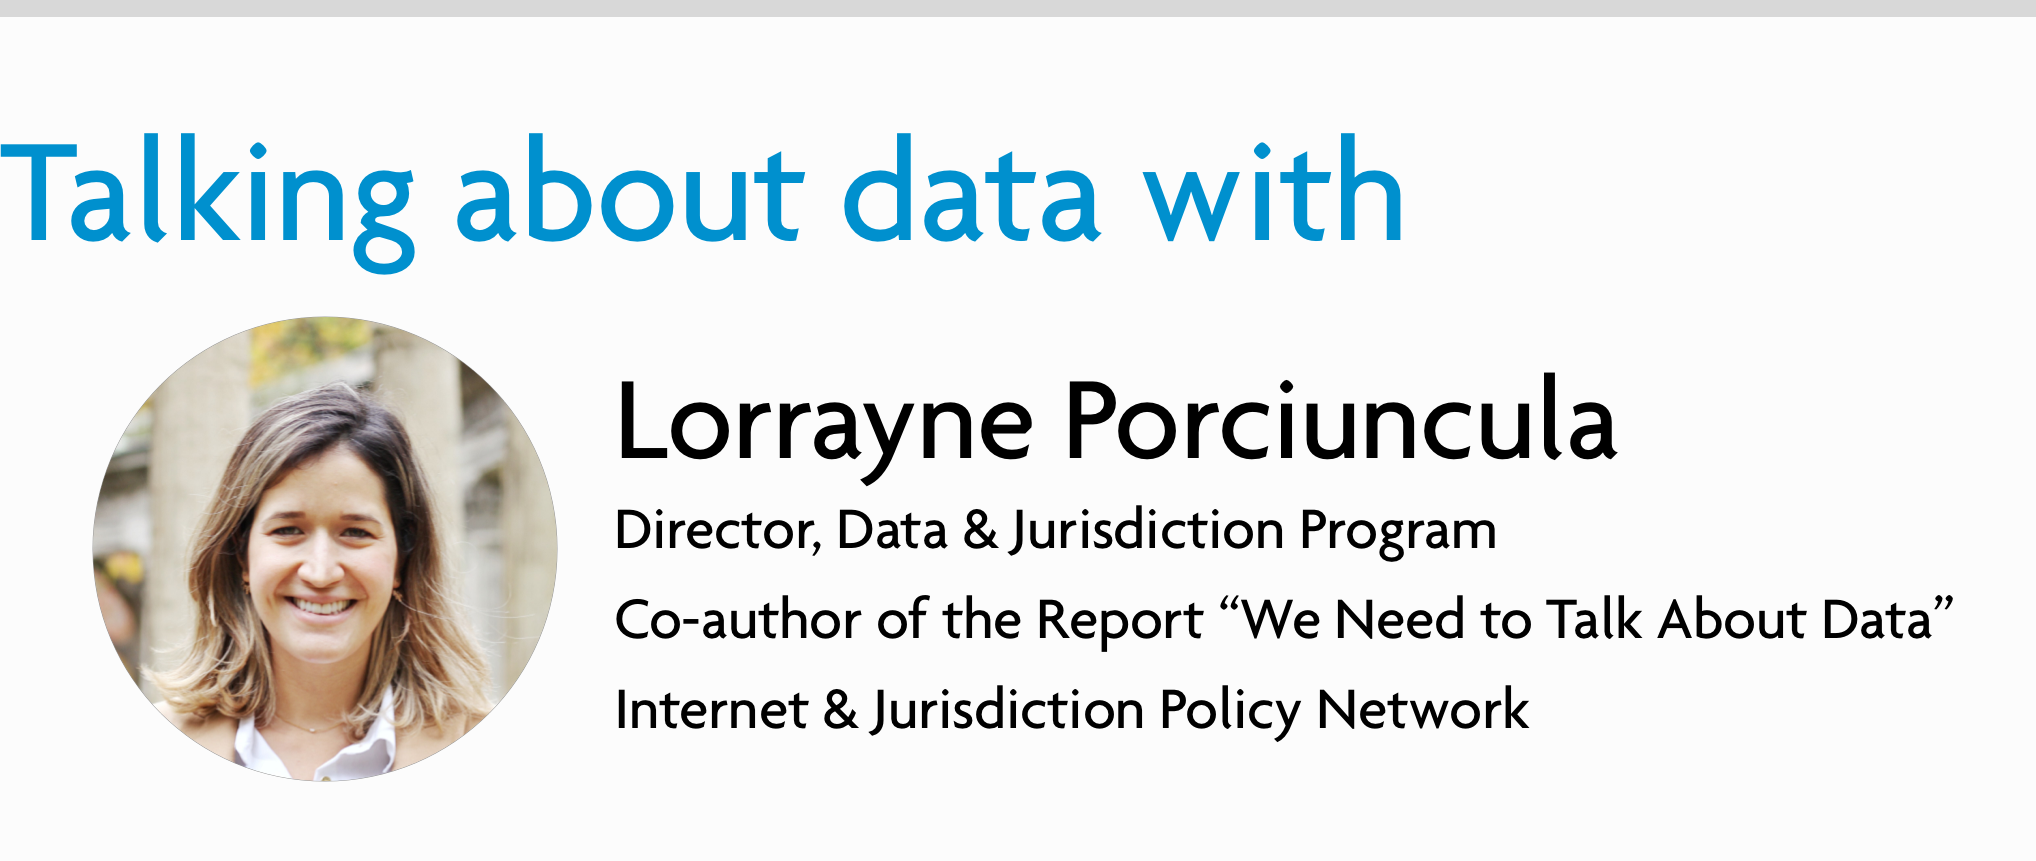 Lorrayne-Porciuncula-Data.png#asset:1147